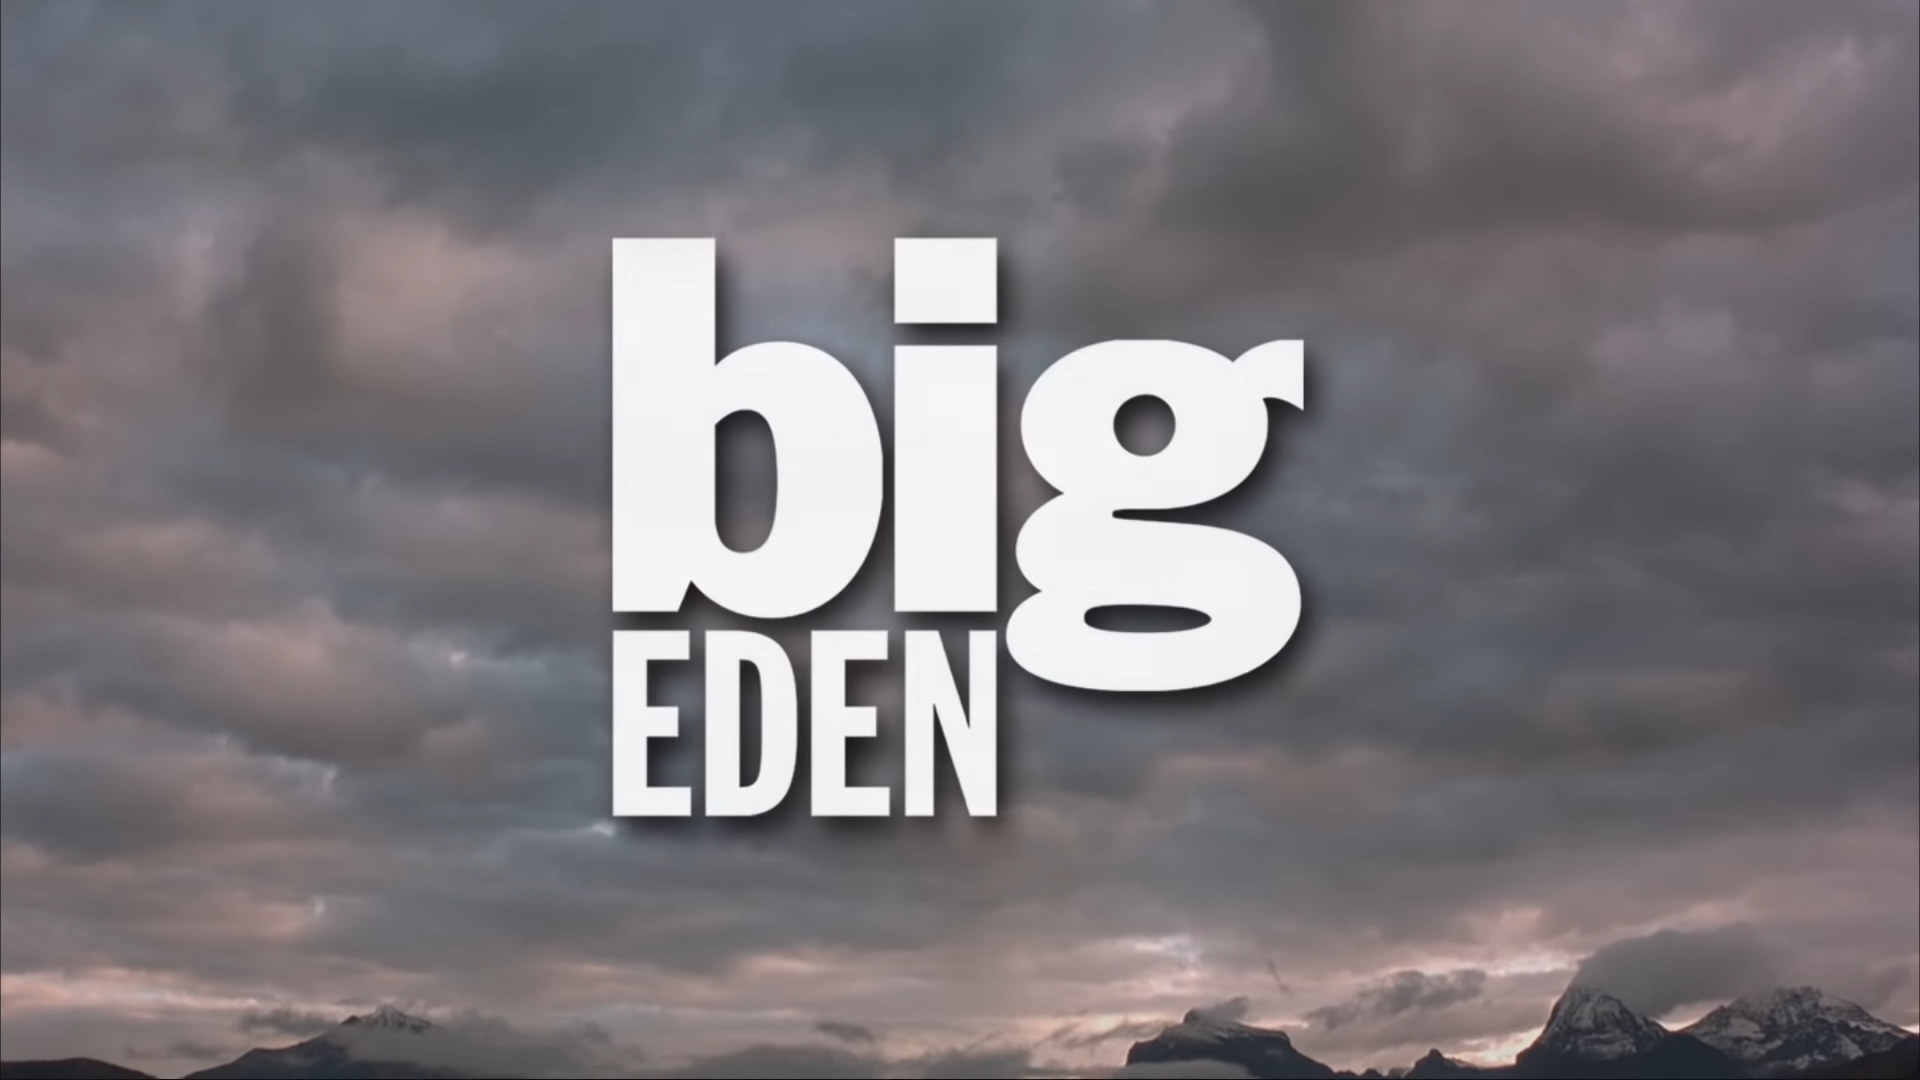 Big Eden movie title against a cloudy sky